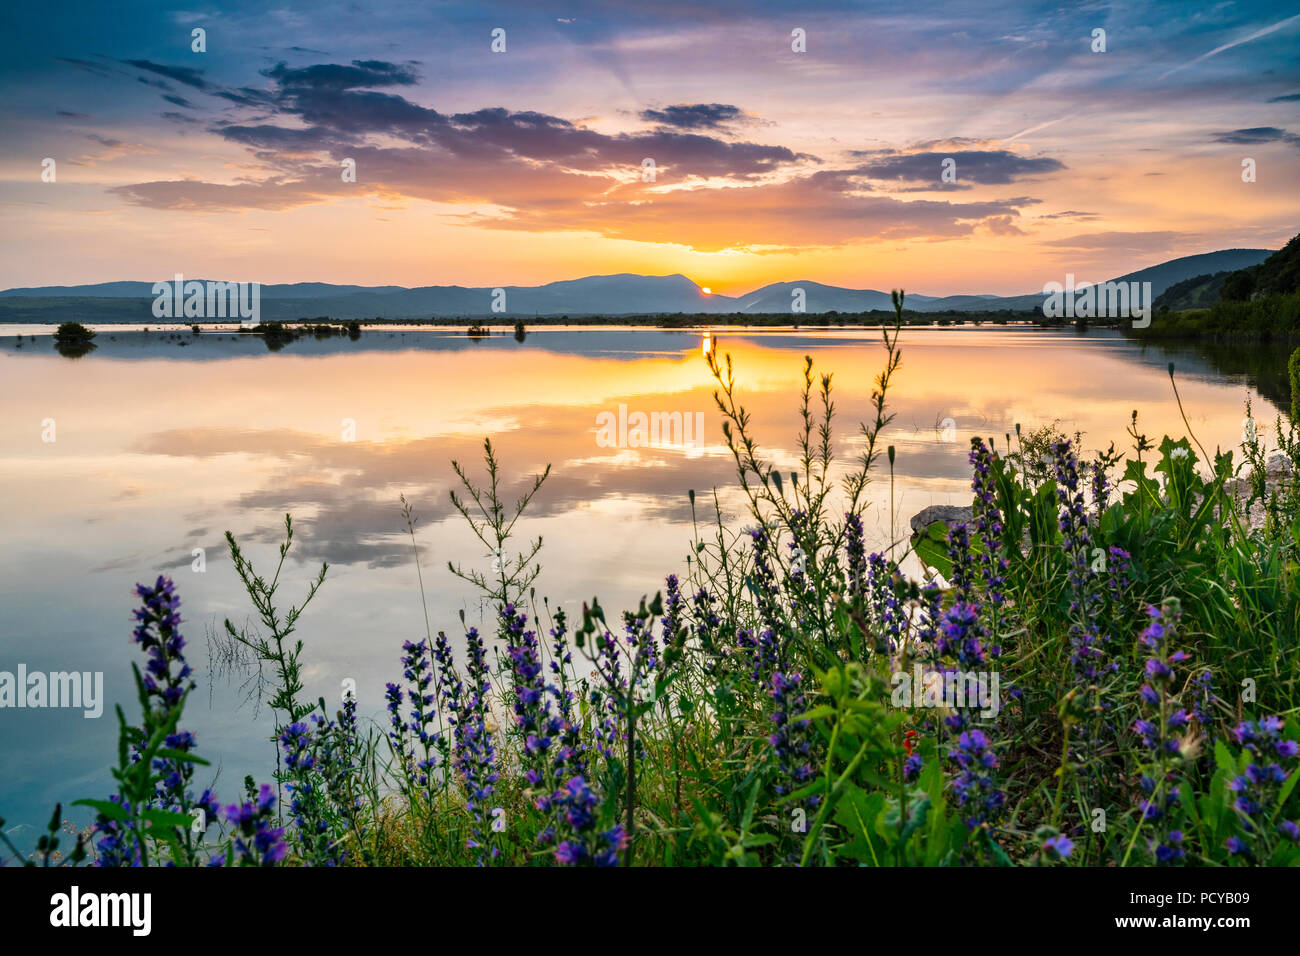 Sunset on the lake with colorful clouds, Lika Croatia Stock Photo